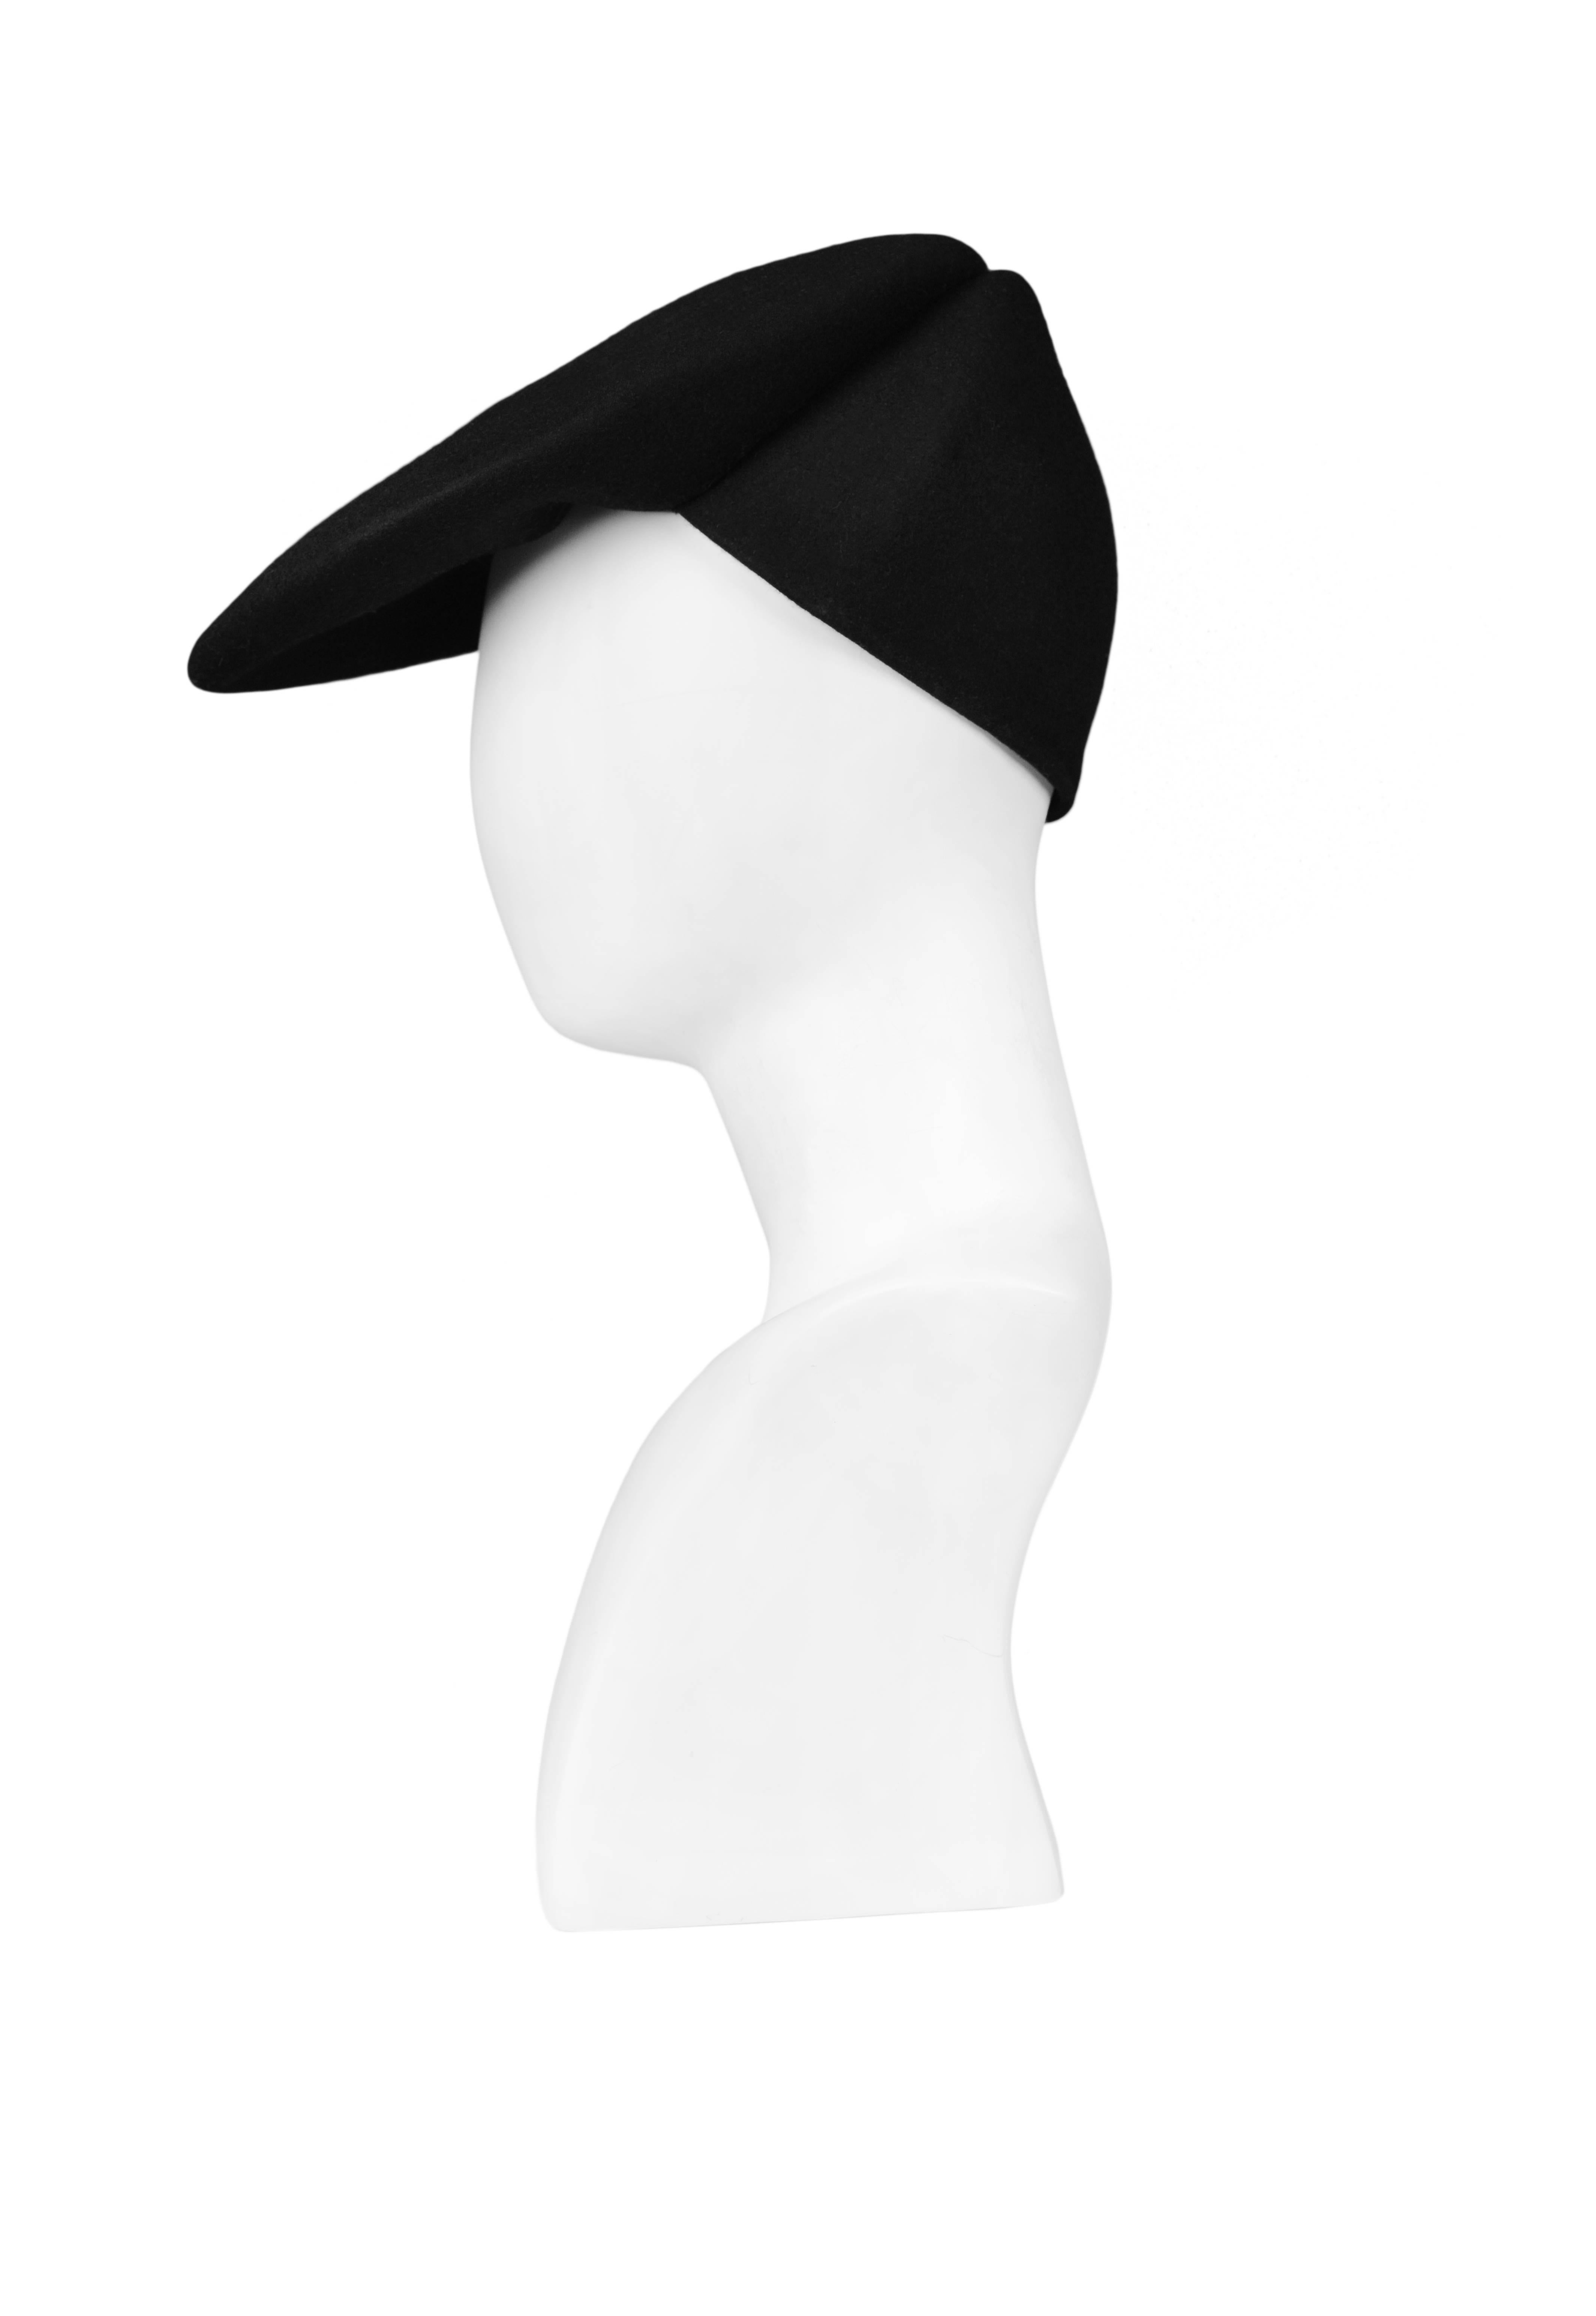 Super Rare Comme des Garcons 2 Way Black Wool Avant Garde Hat Circa 1990  1